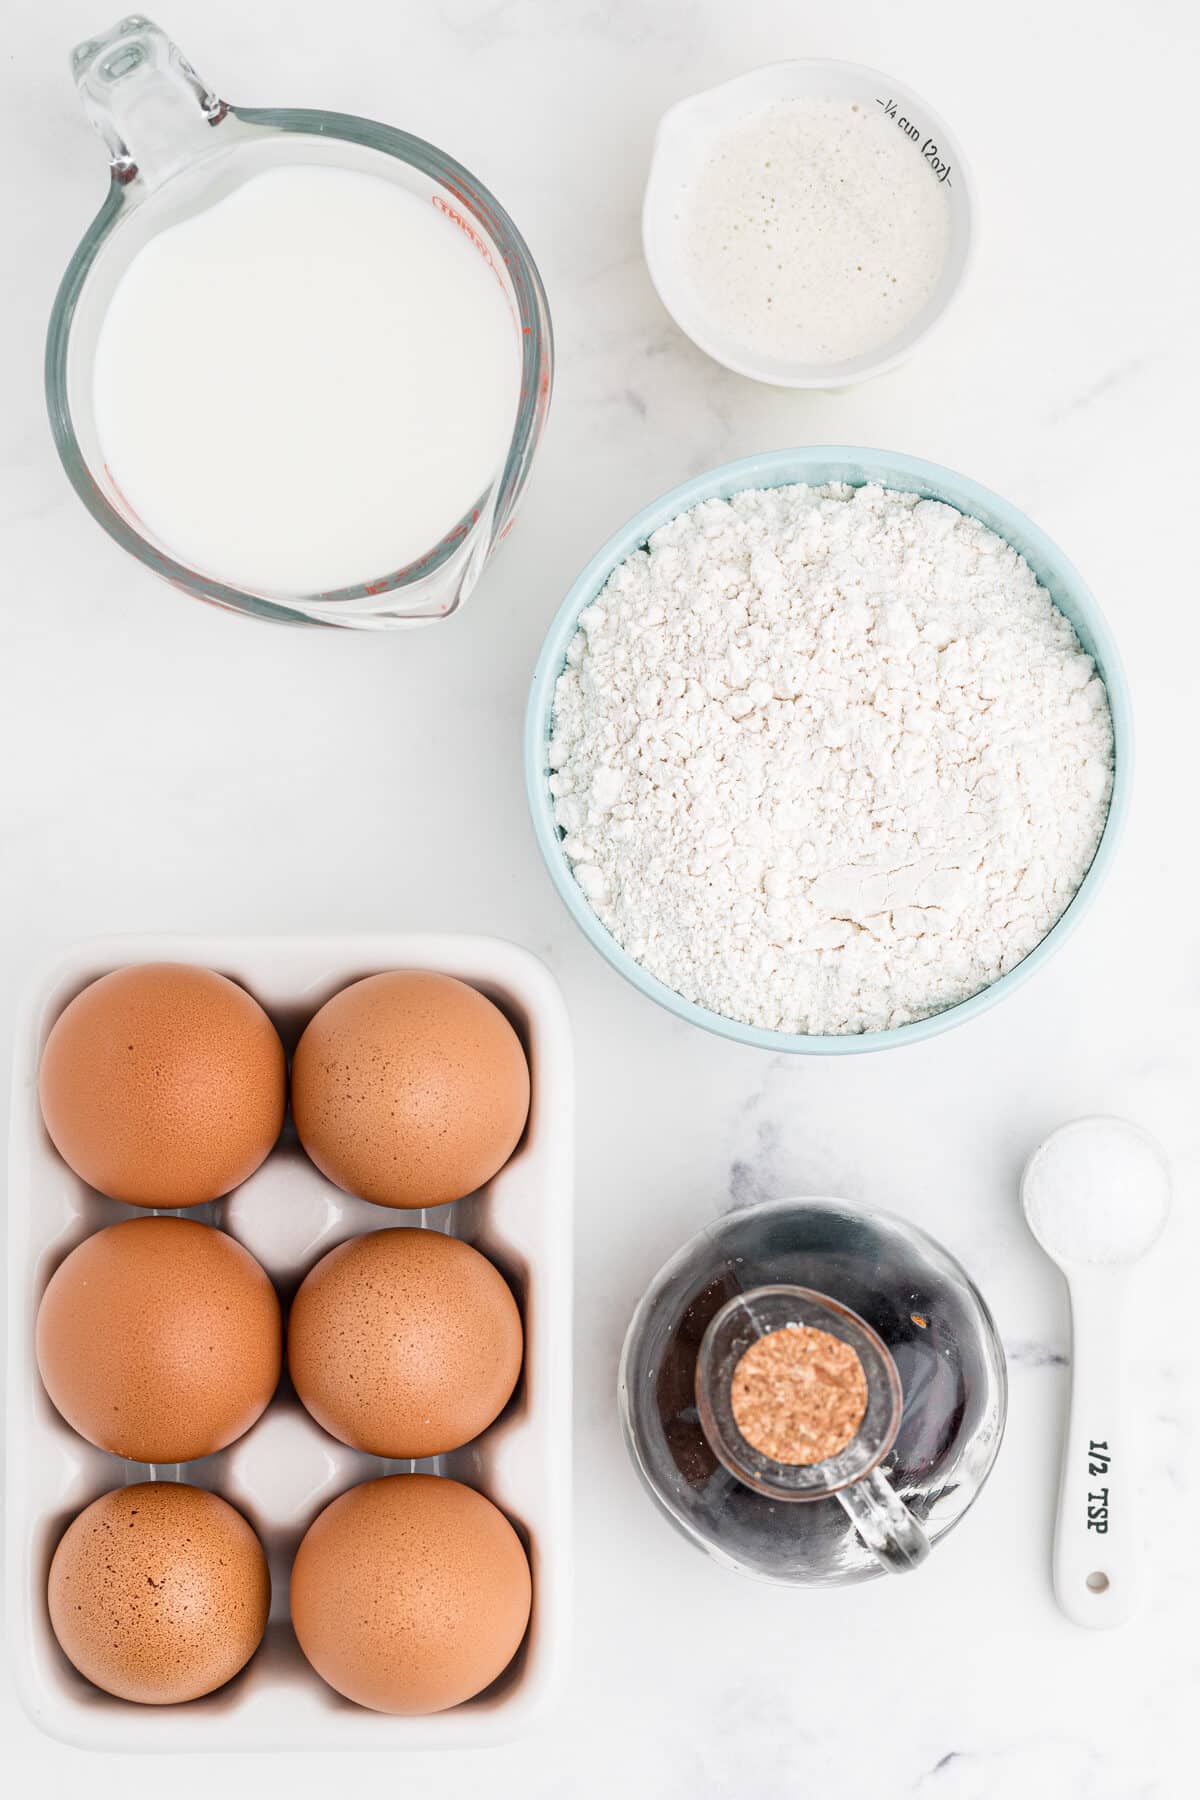 ingredients for popovers: flour, milk, eggs, vanilla, coconut oil, salt